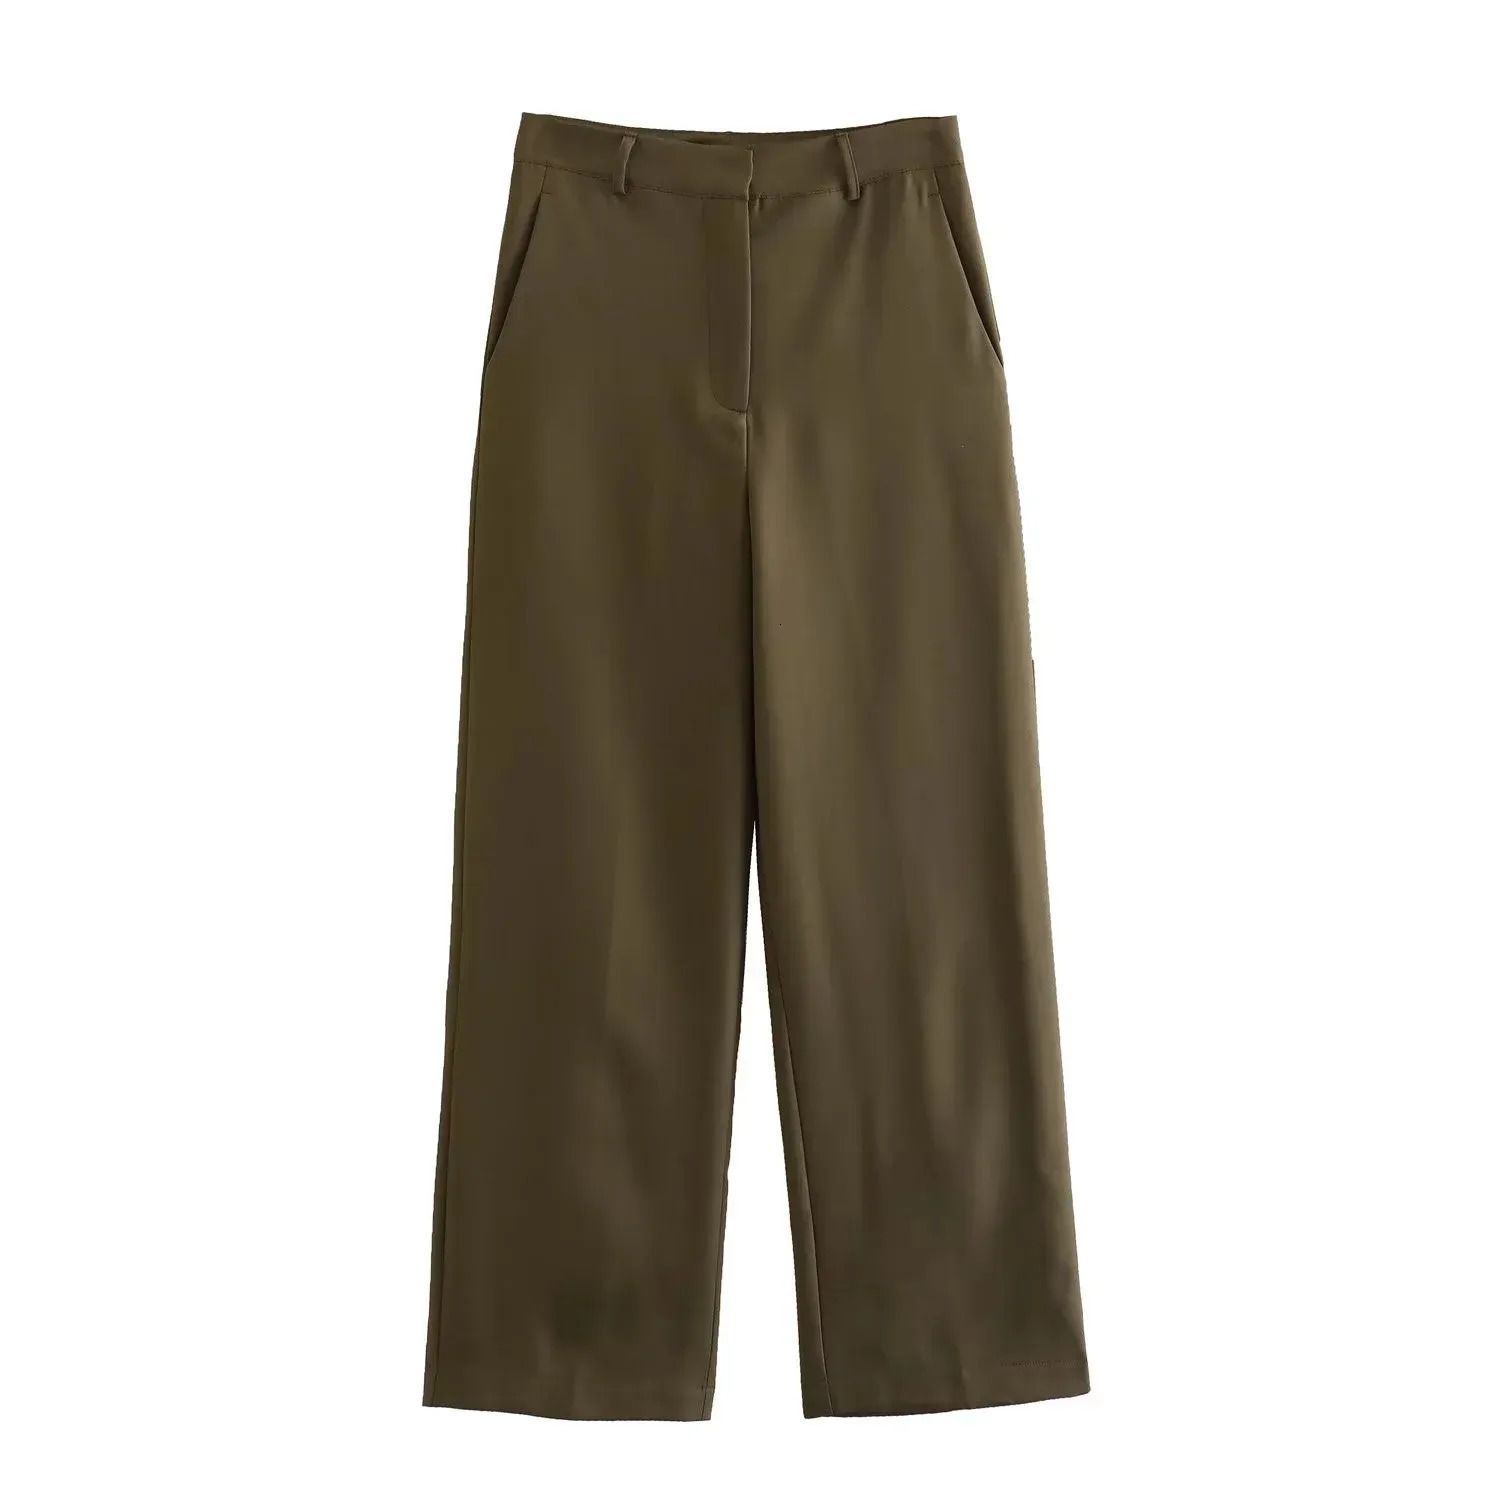 pantaloni bruno-verde